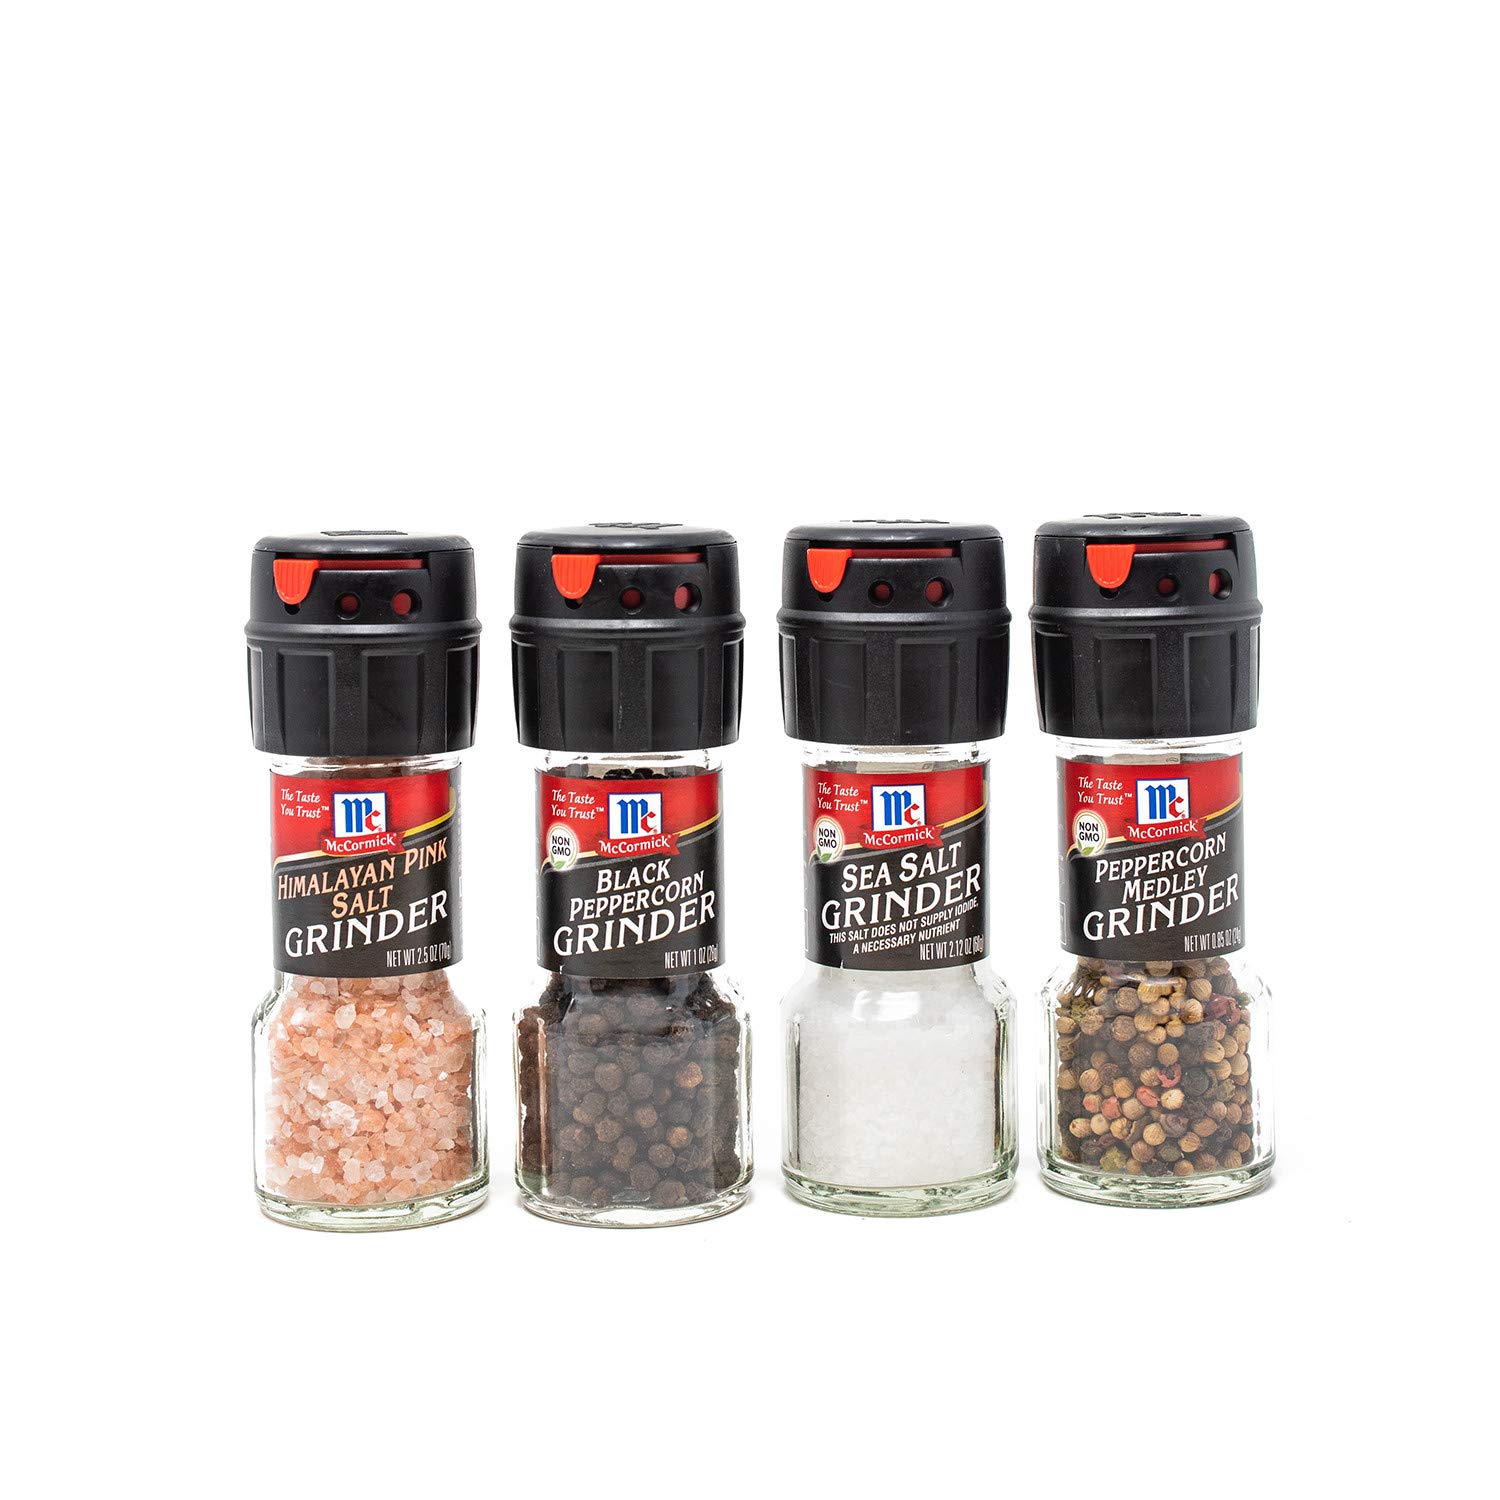 McCormick Salt & Pepper Grinder Variety Pack (Himalayan Pink Salt